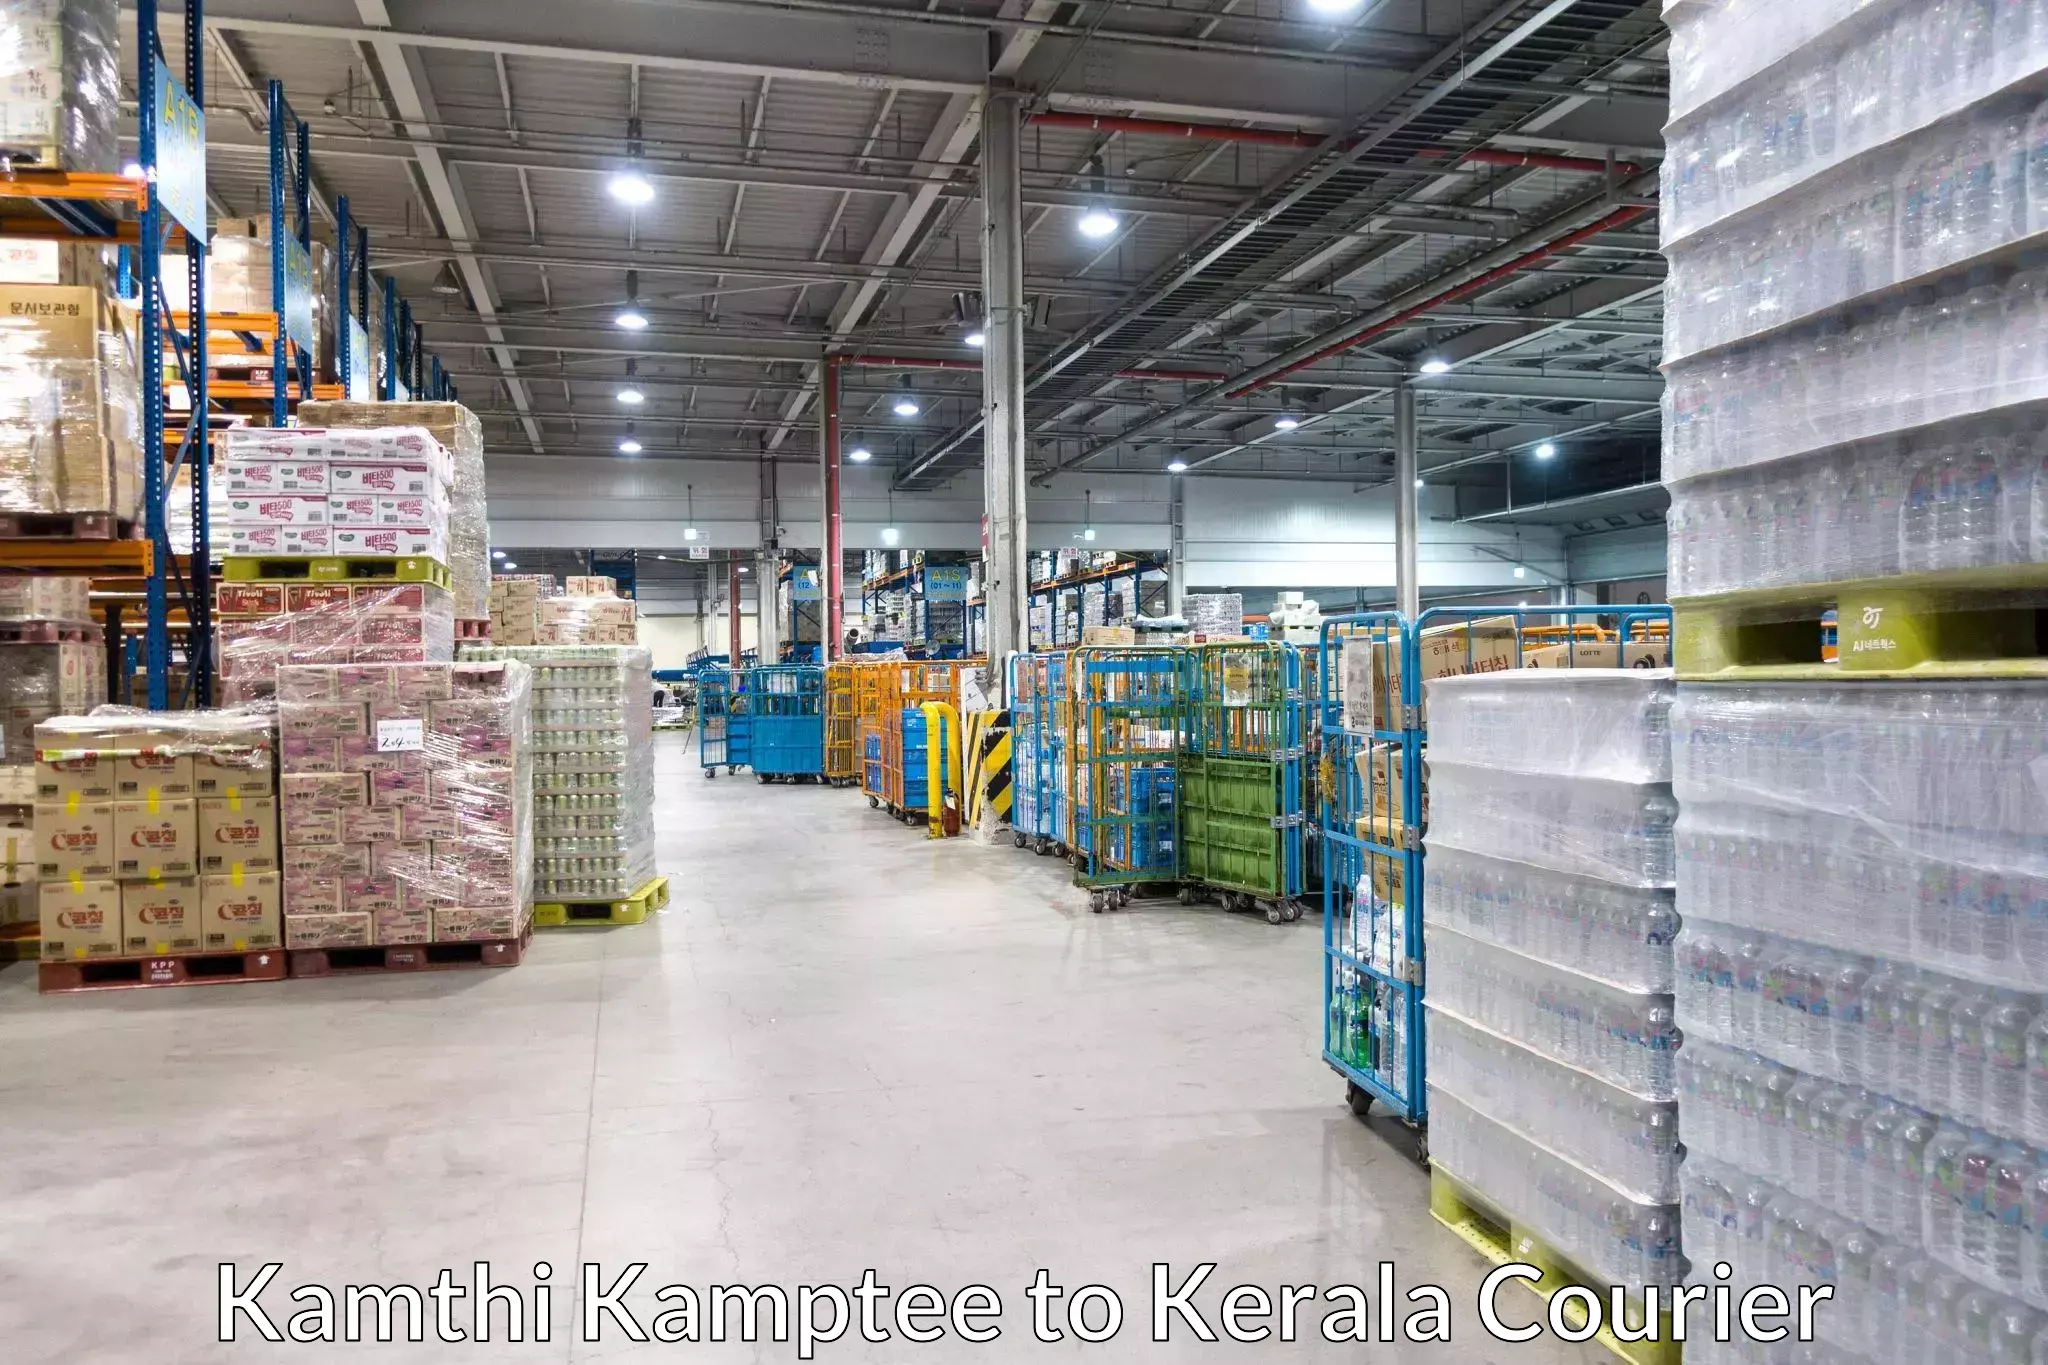 Courier service comparison Kamthi Kamptee to Kerala